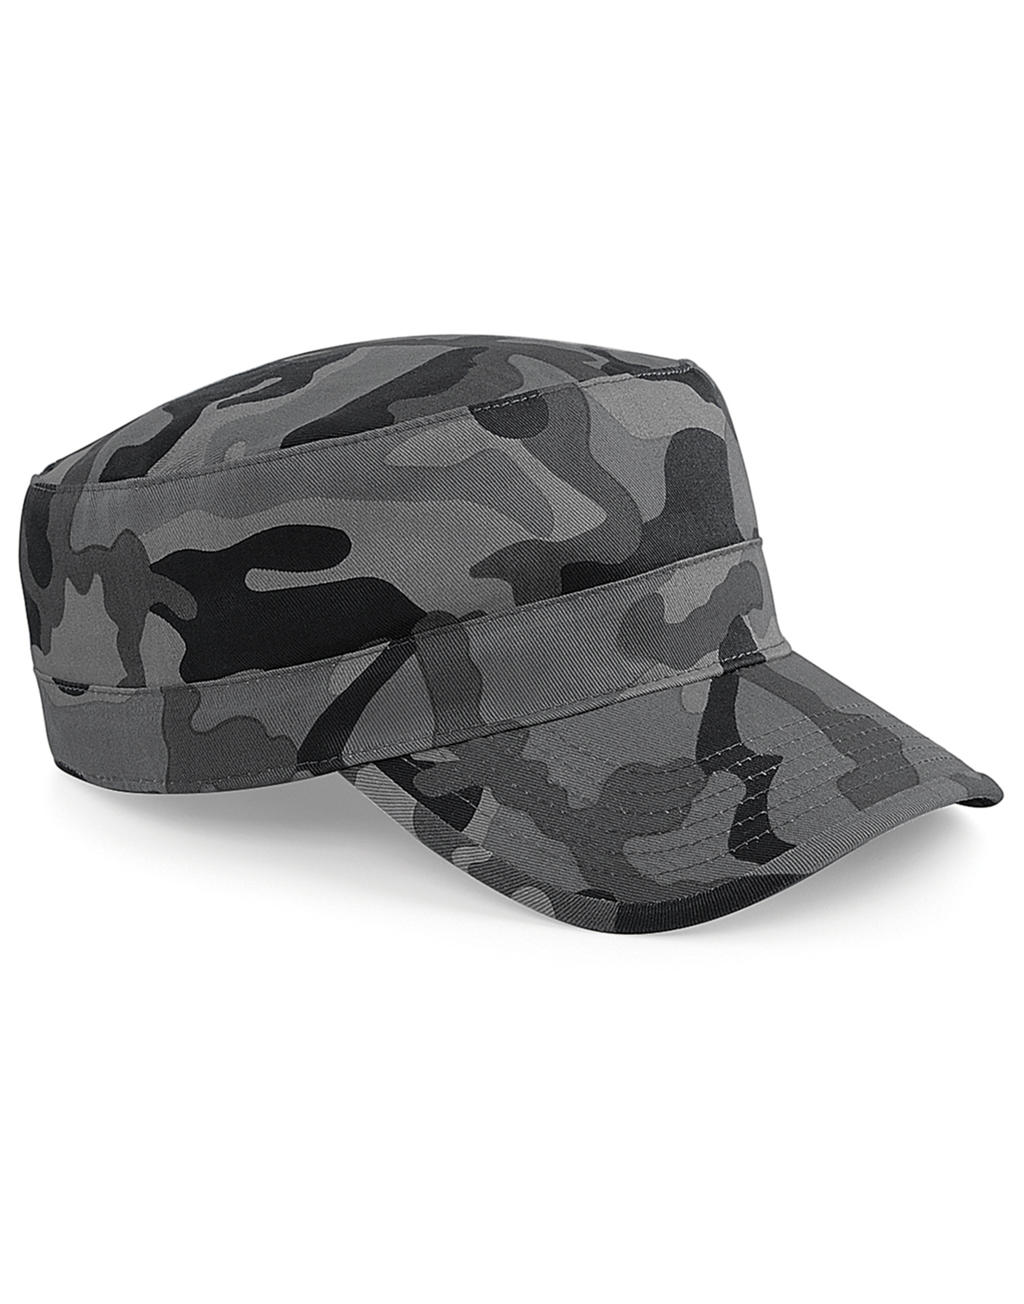  Camouflage Army Cap in Farbe Midnight Camo